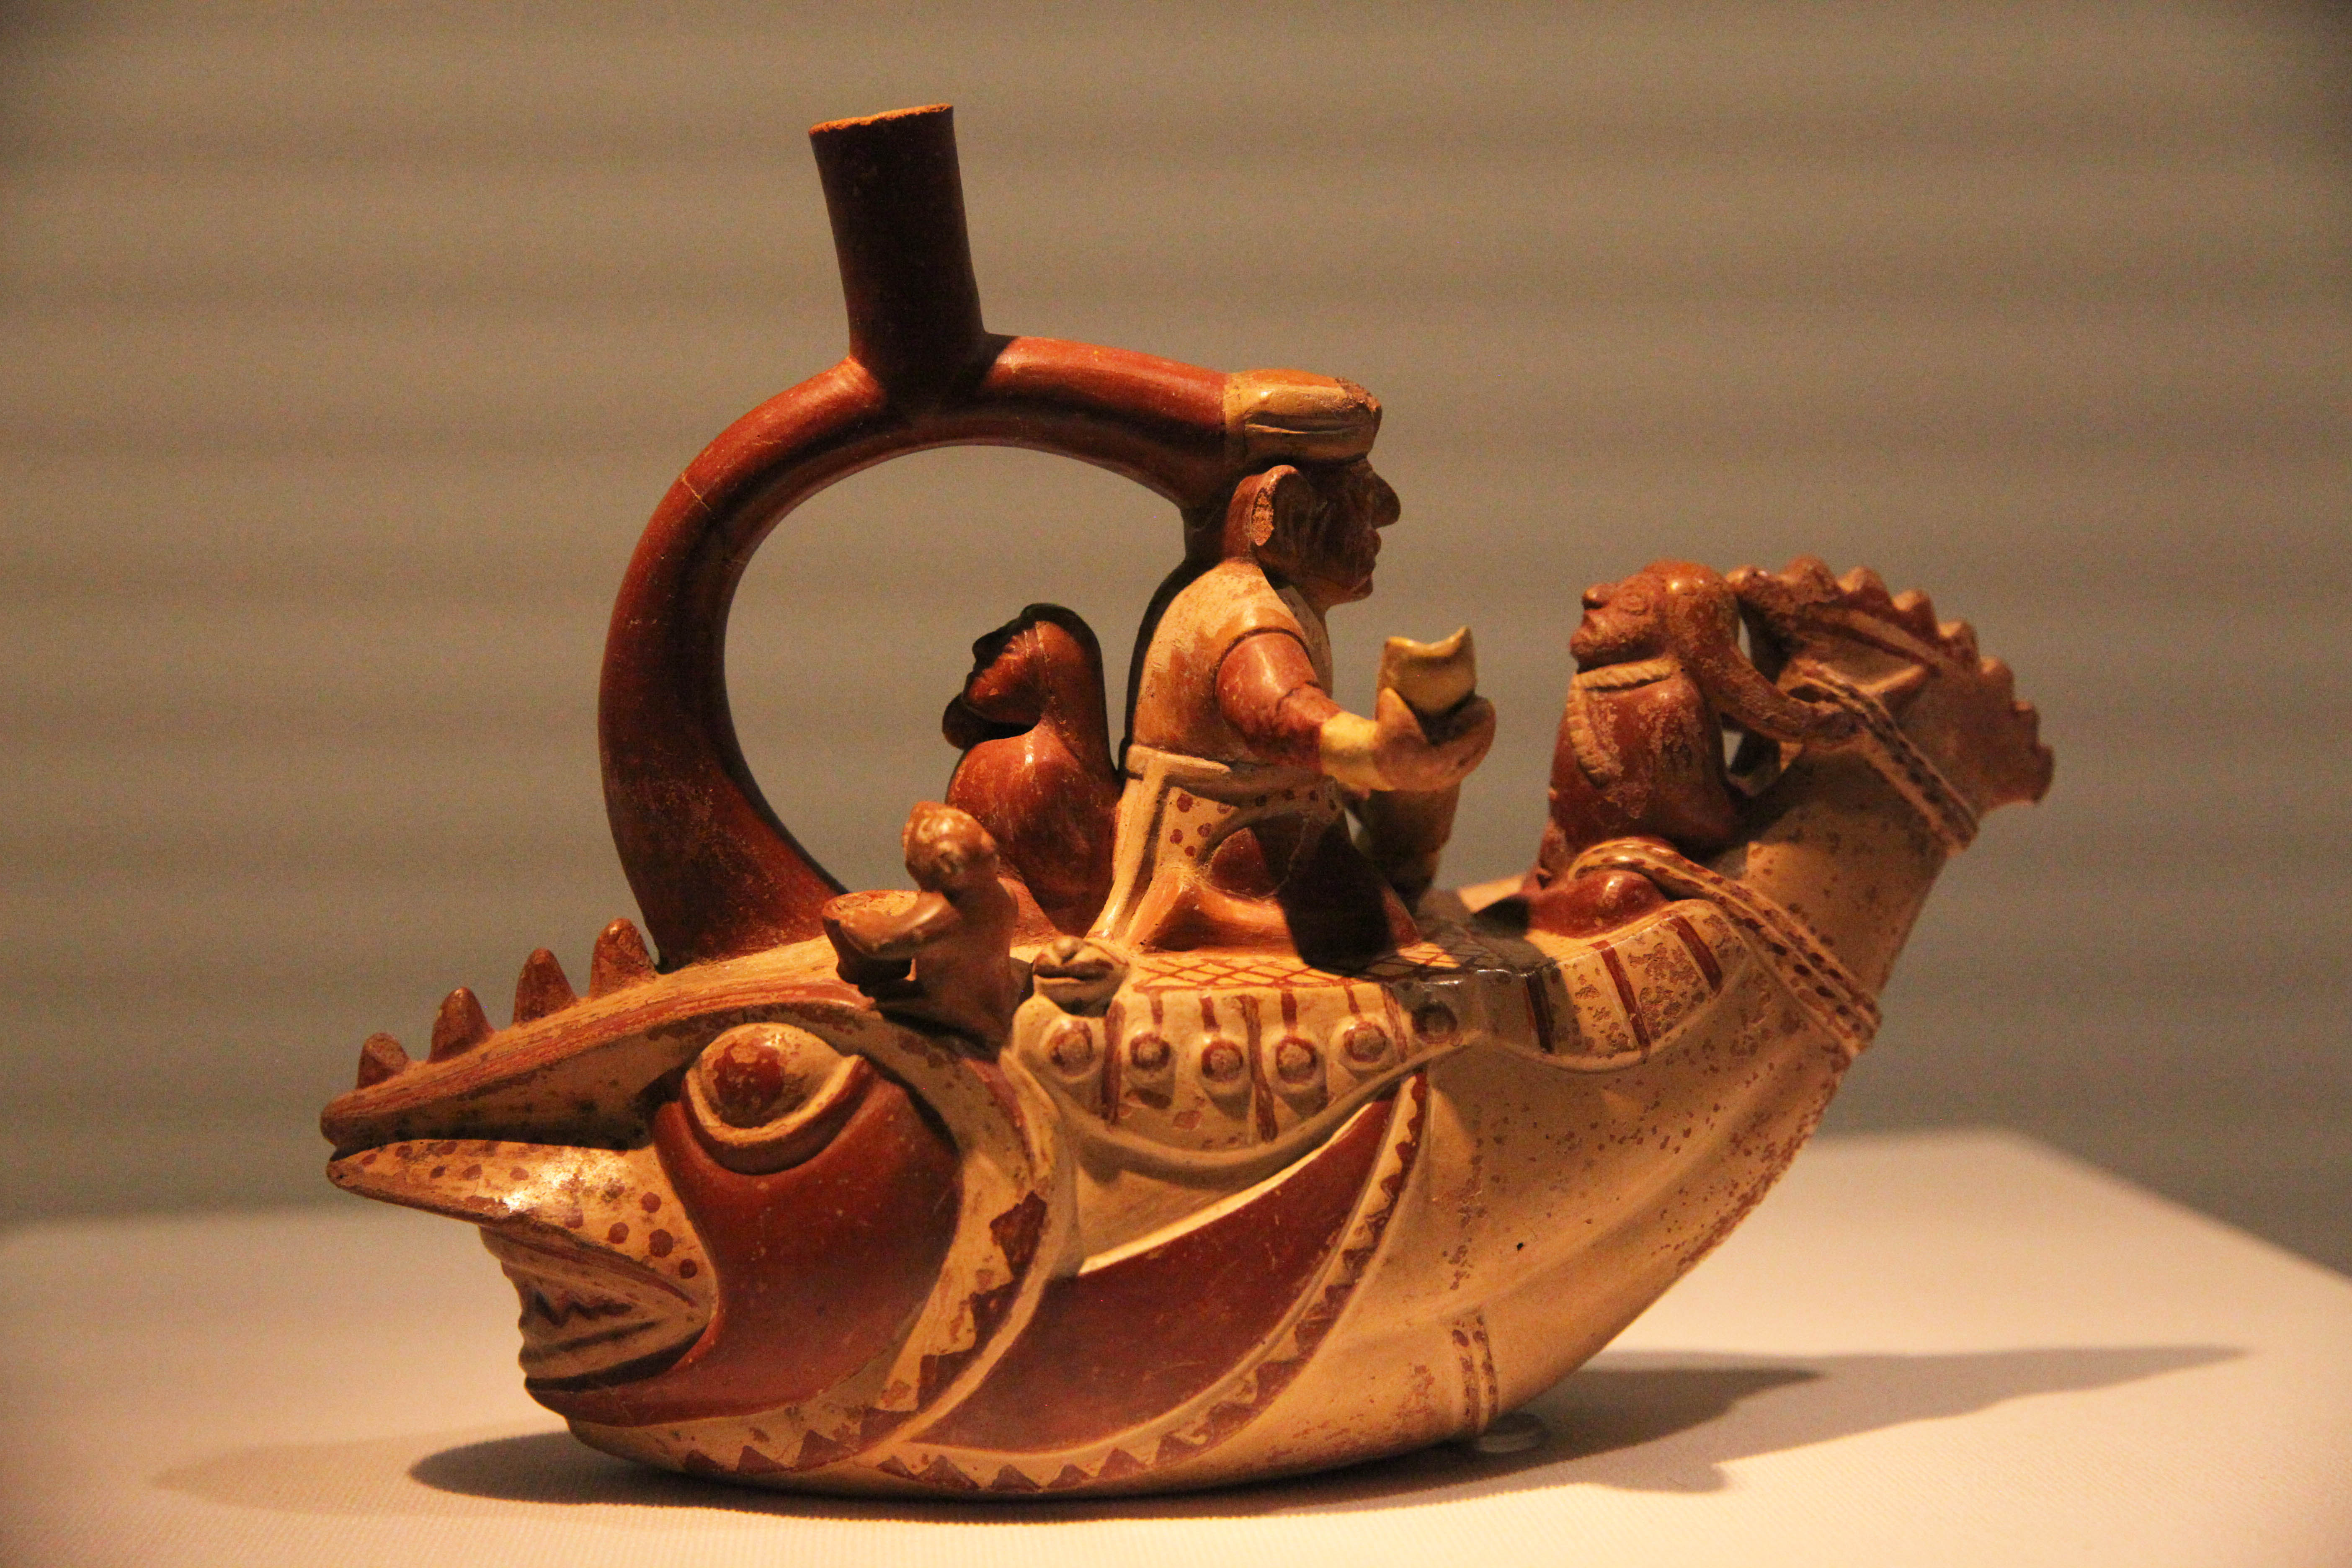 Beijing exhibit presents Andean civilization of Peru